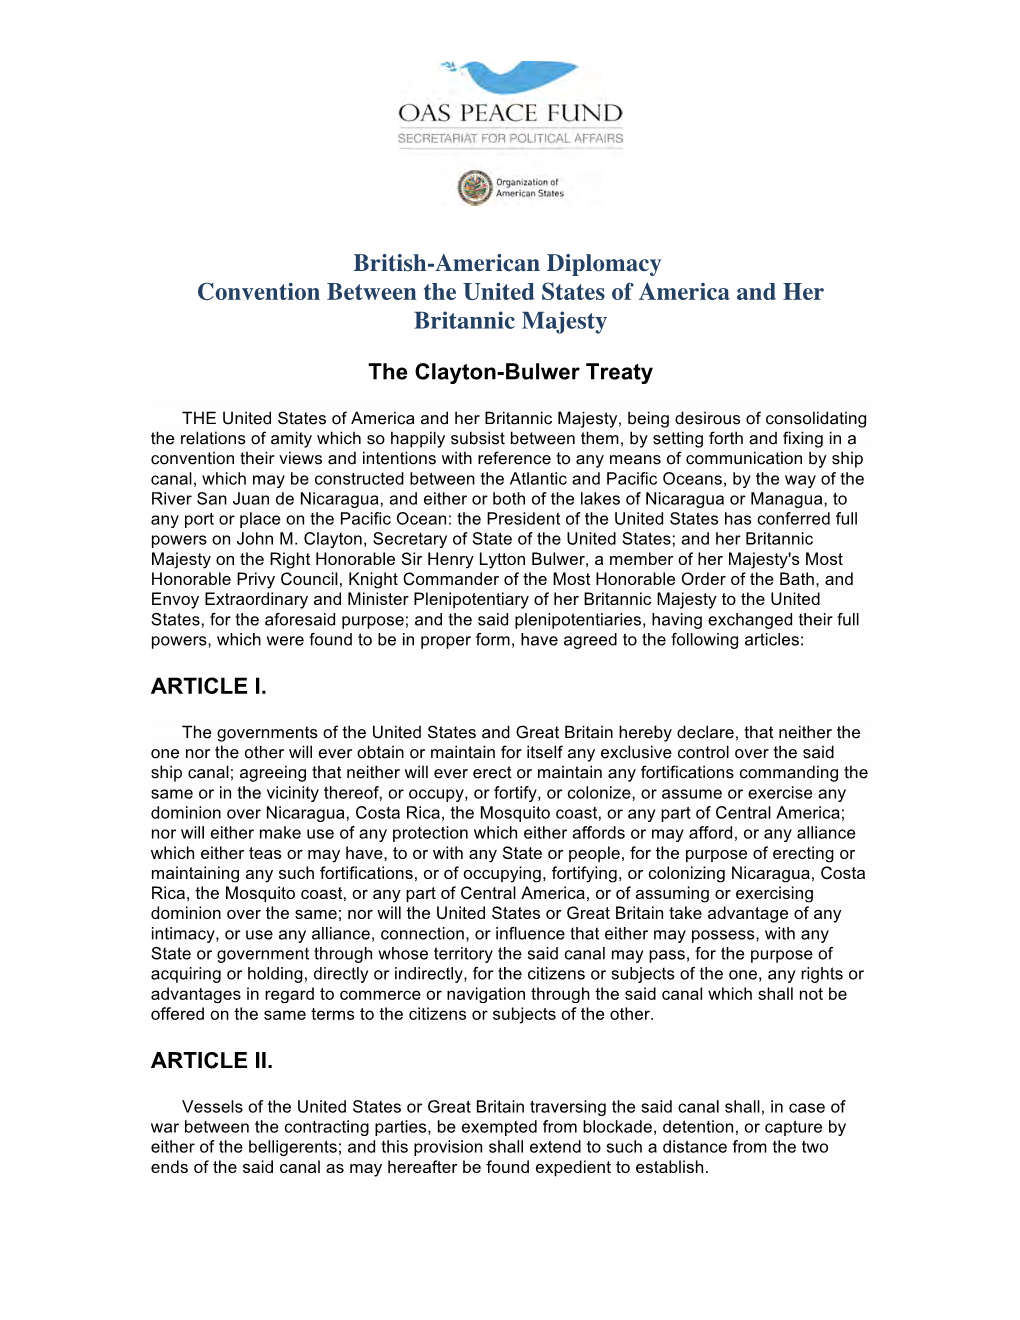 The Clayton-Bulwer Treaty-English